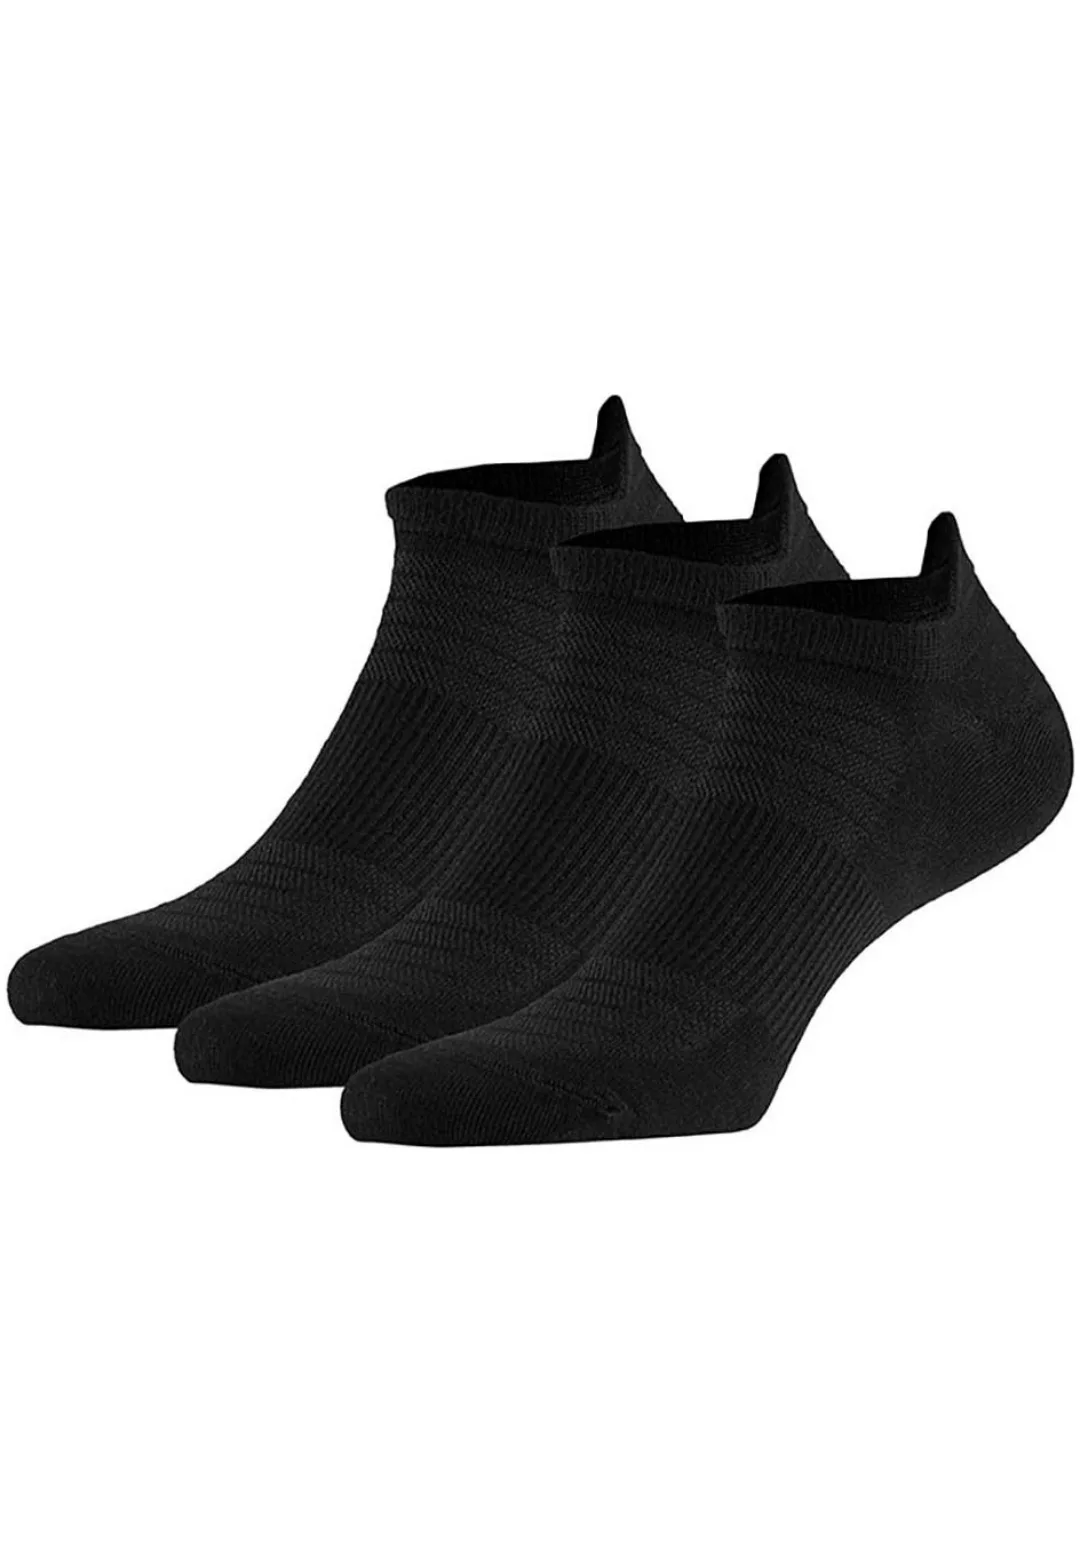 XTREME sockswear Füßlinge, (6 Paar) günstig online kaufen